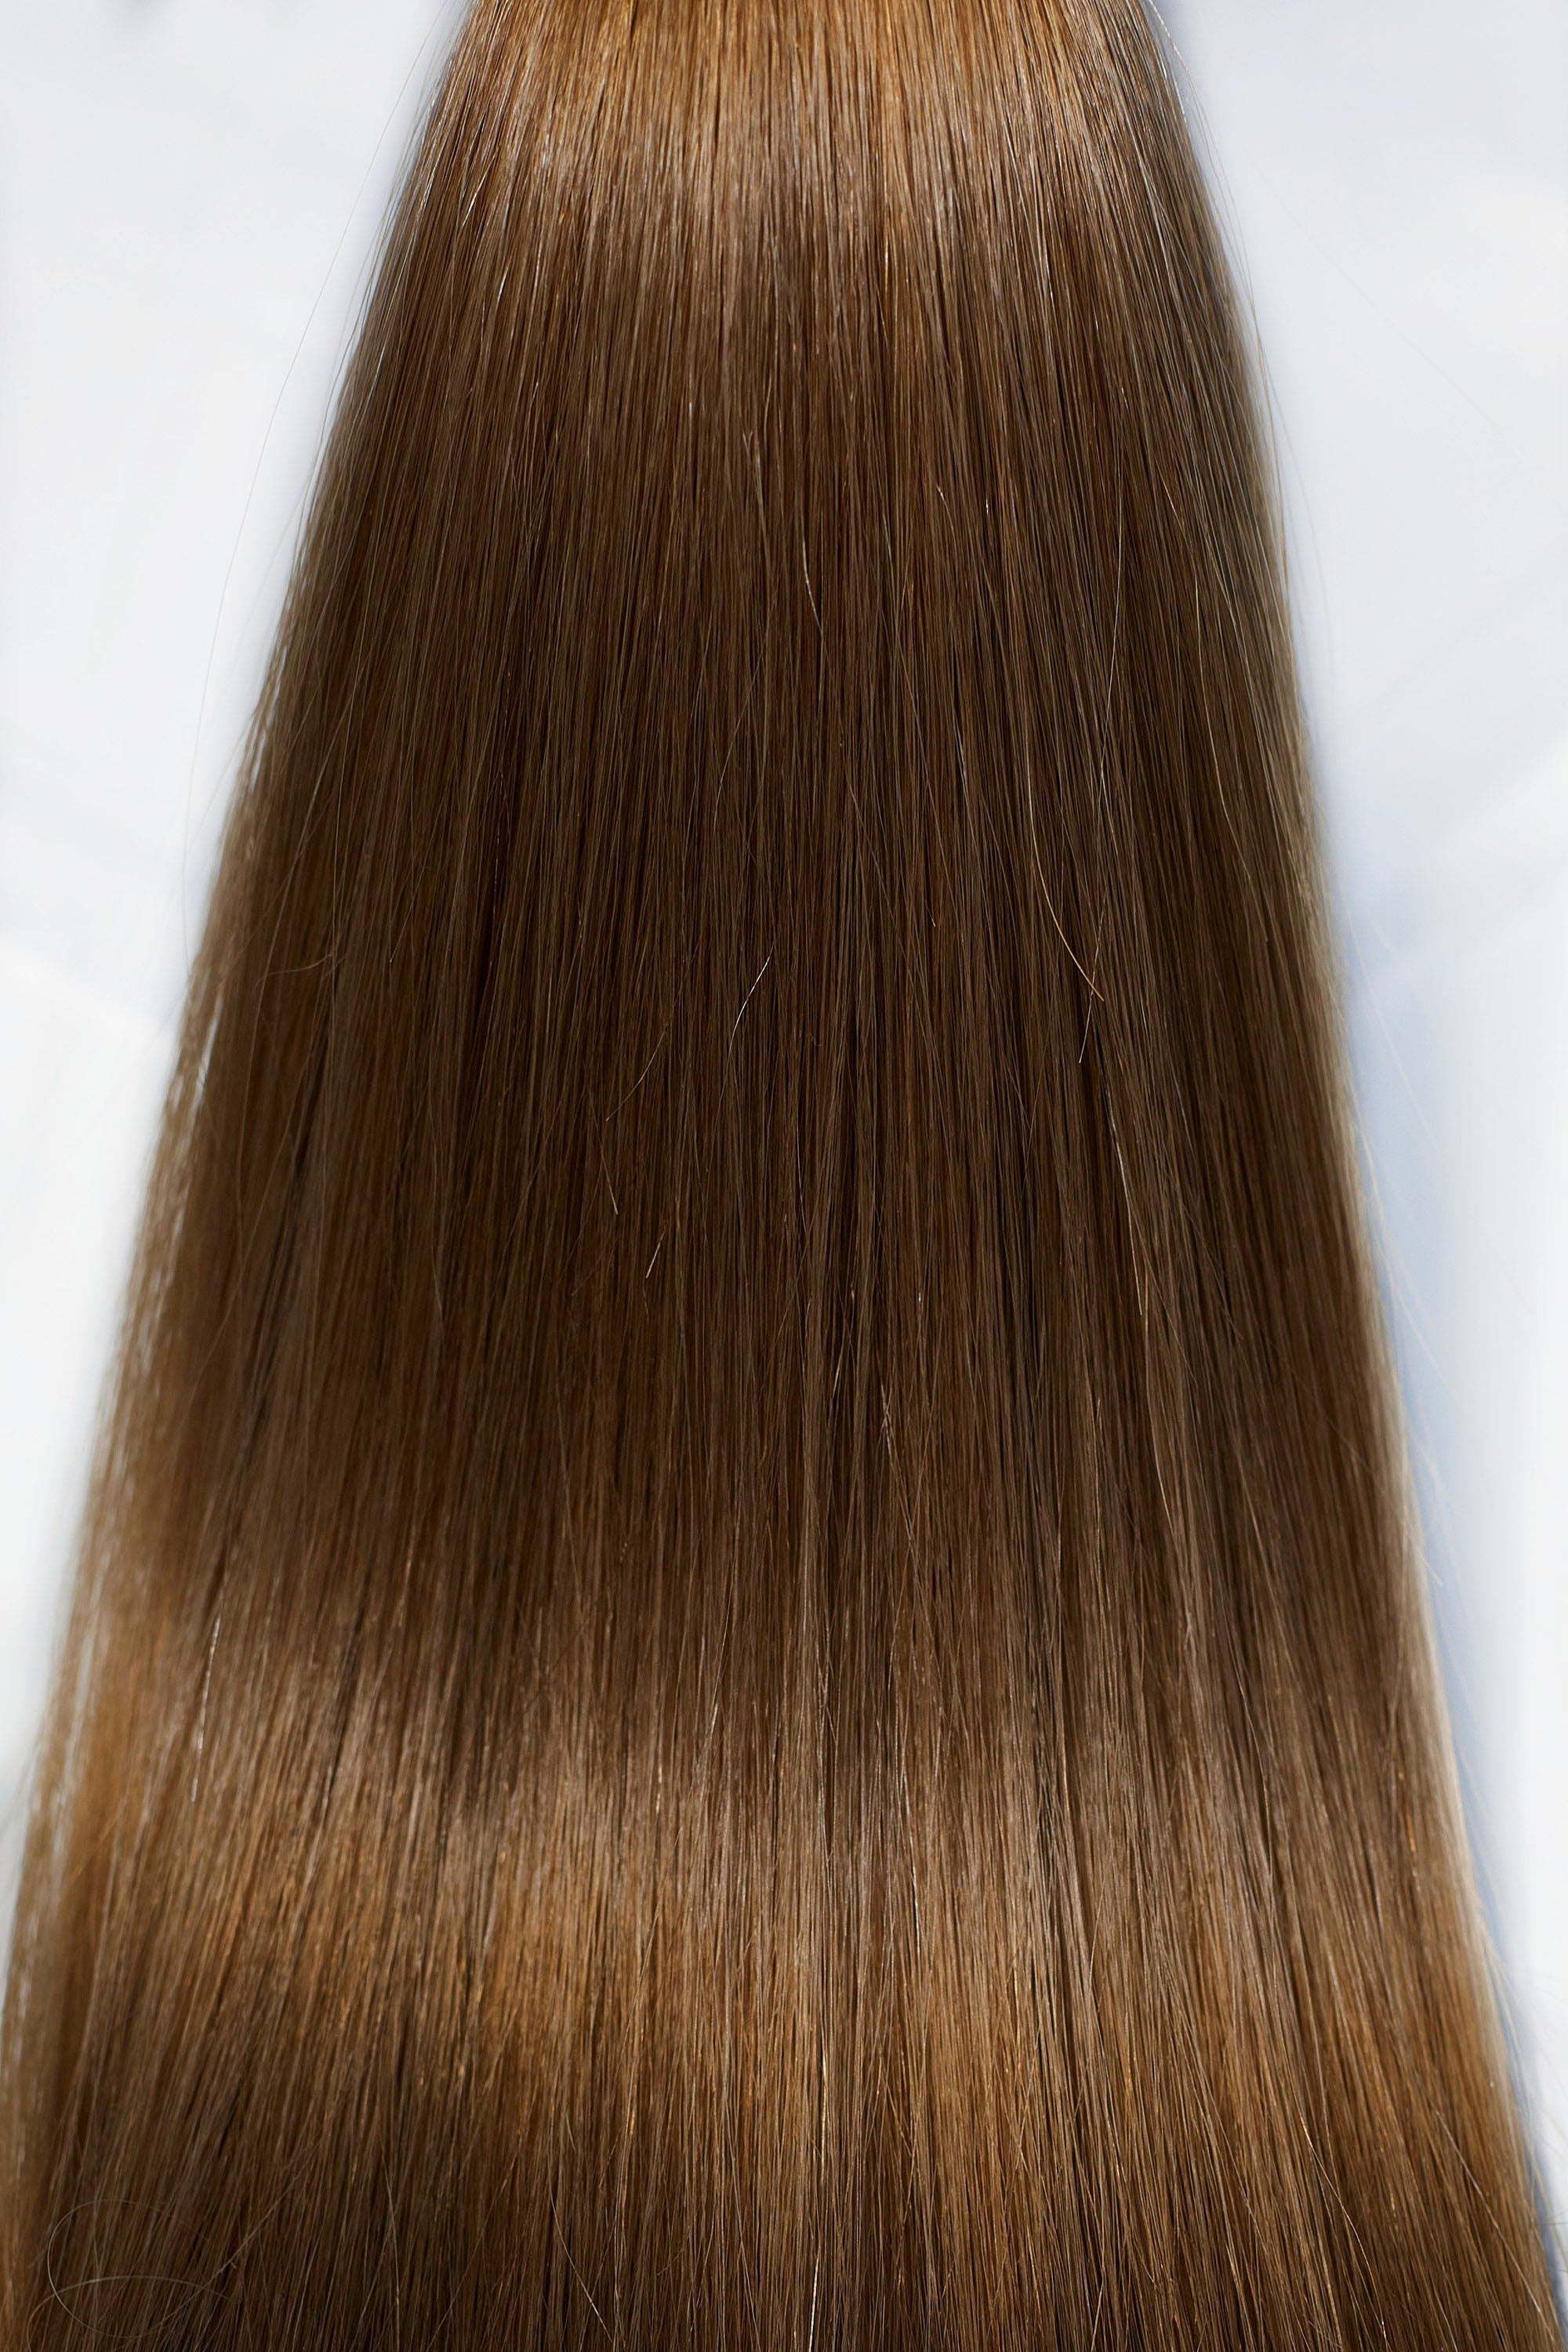 Behair professional Keratin Tip "Premium" 18" (45cm) Natural Straight Chestnut #6 - 25g (1g each pcs) hair extensions